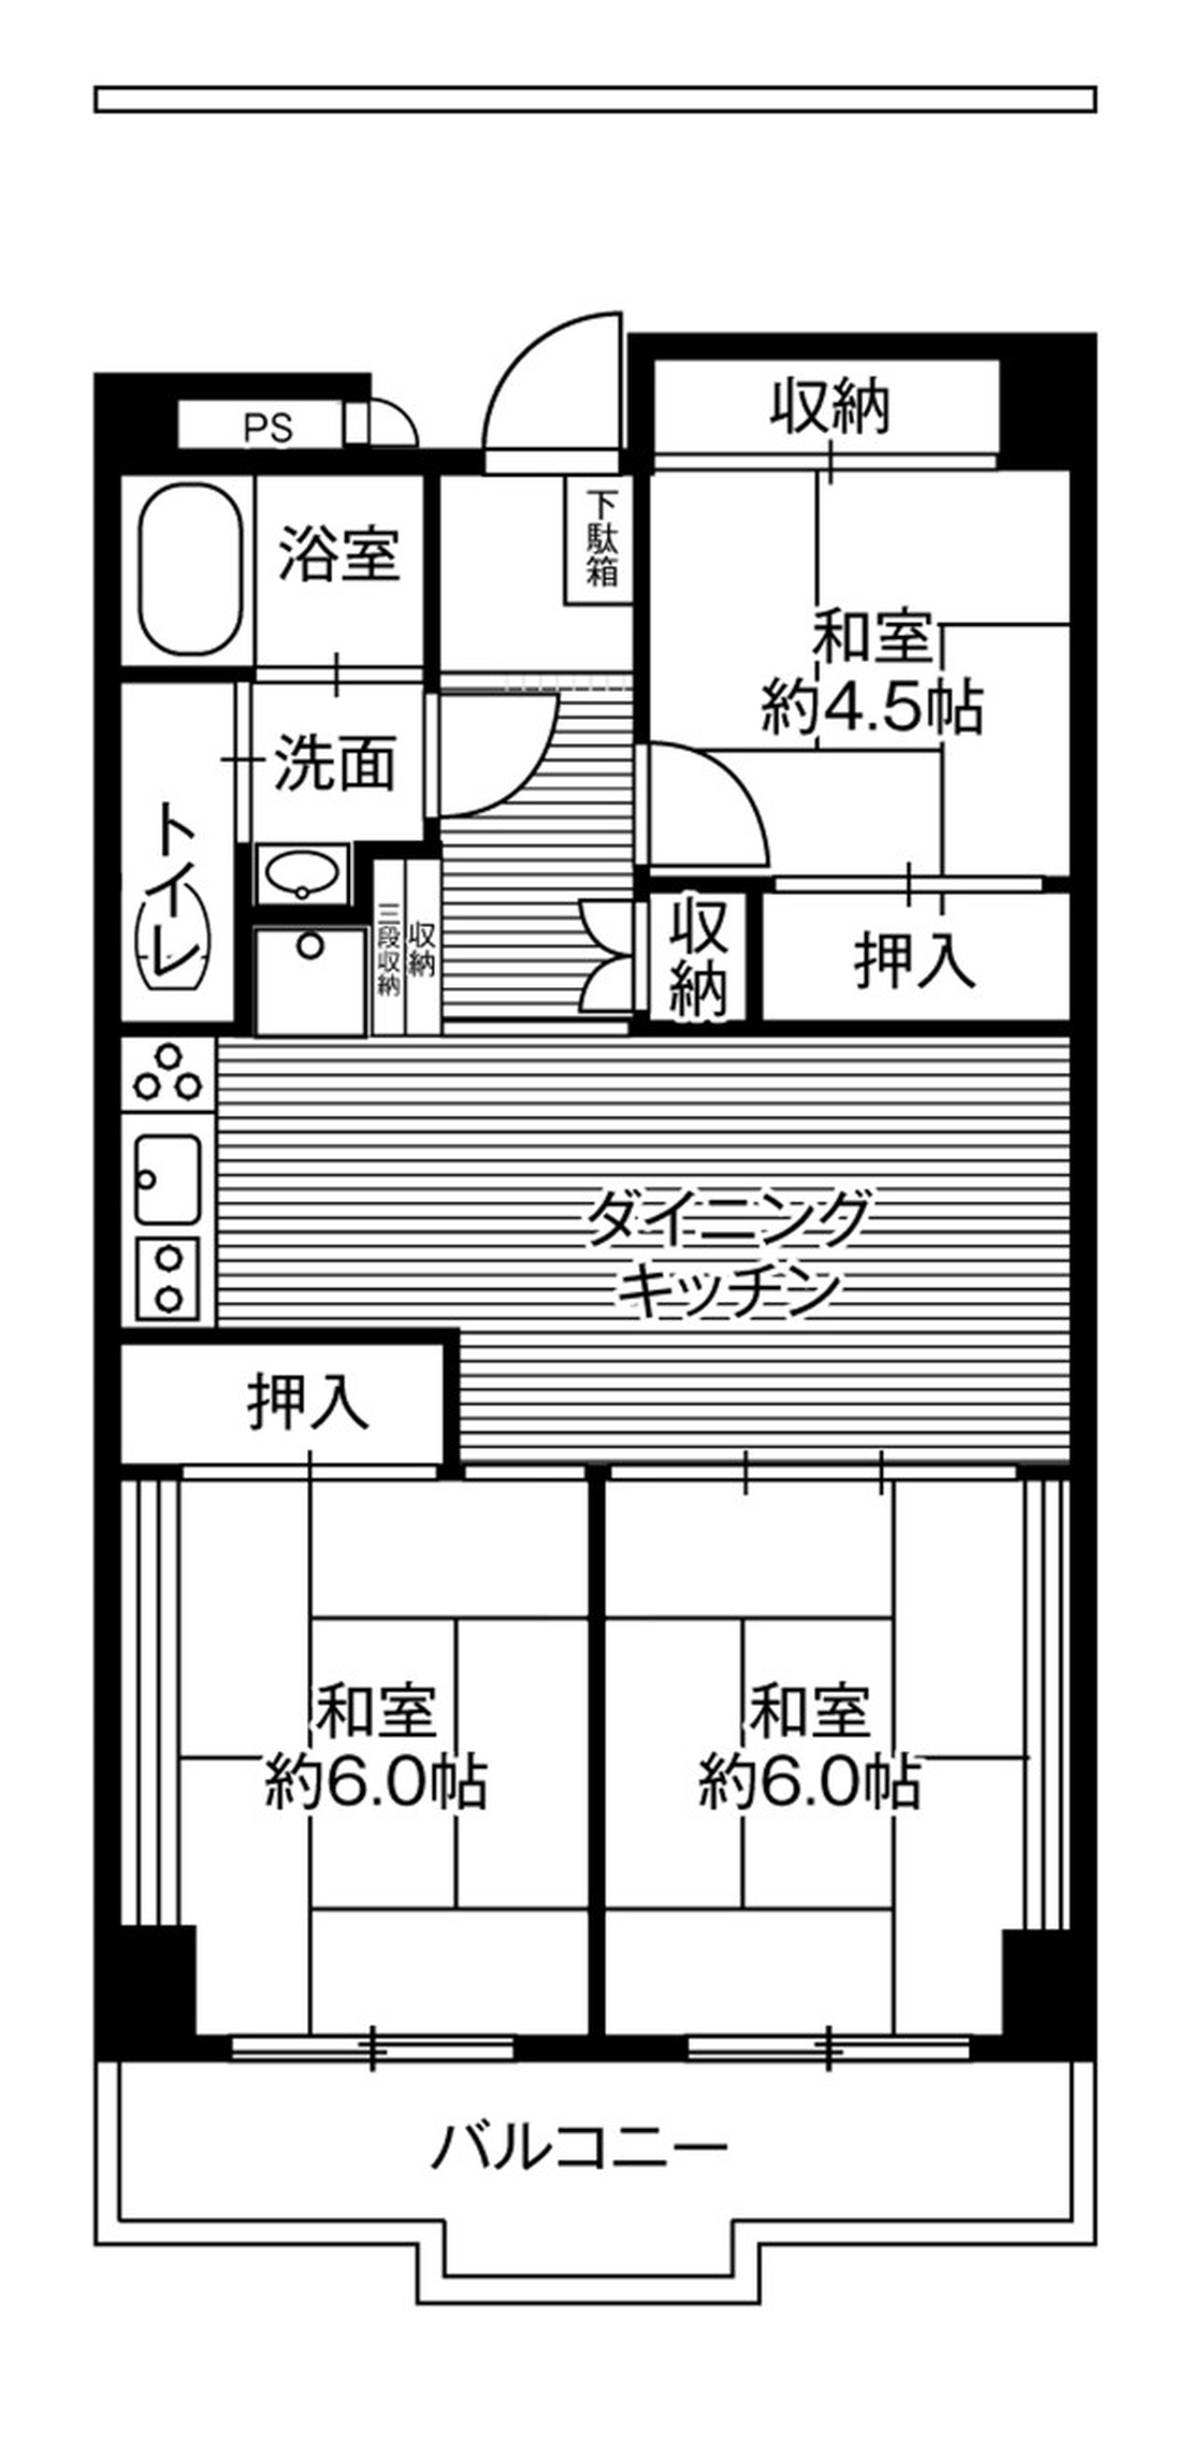 3DK floorplan of Village House Tochigi Hinode Tower in Tochigi-shi